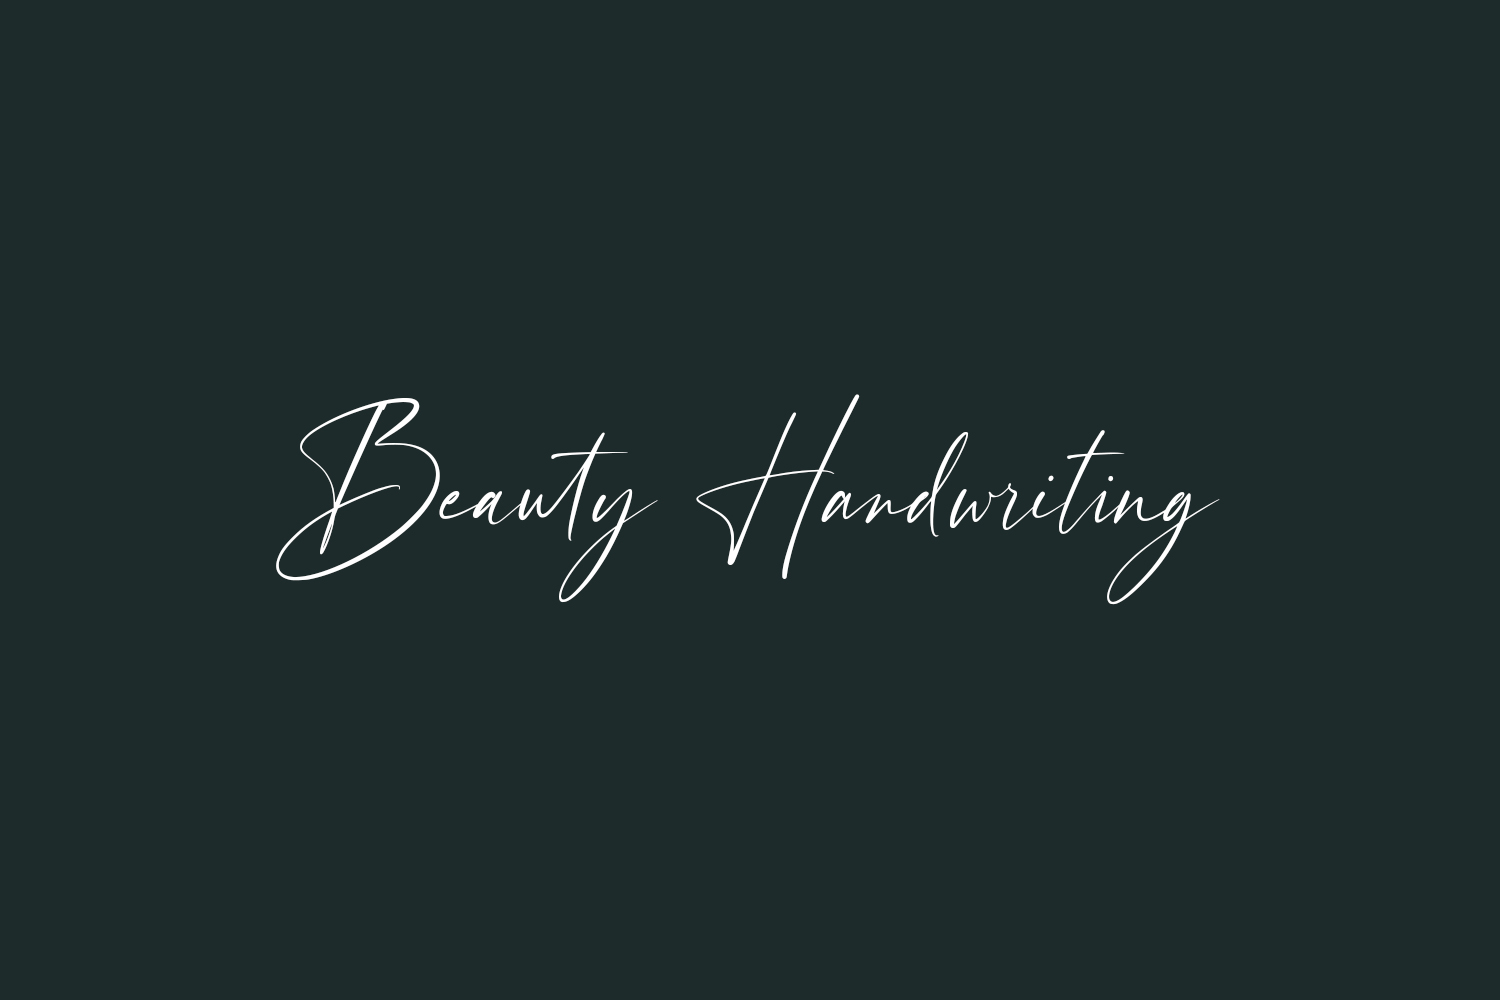 Beauty Handwriting Free Font